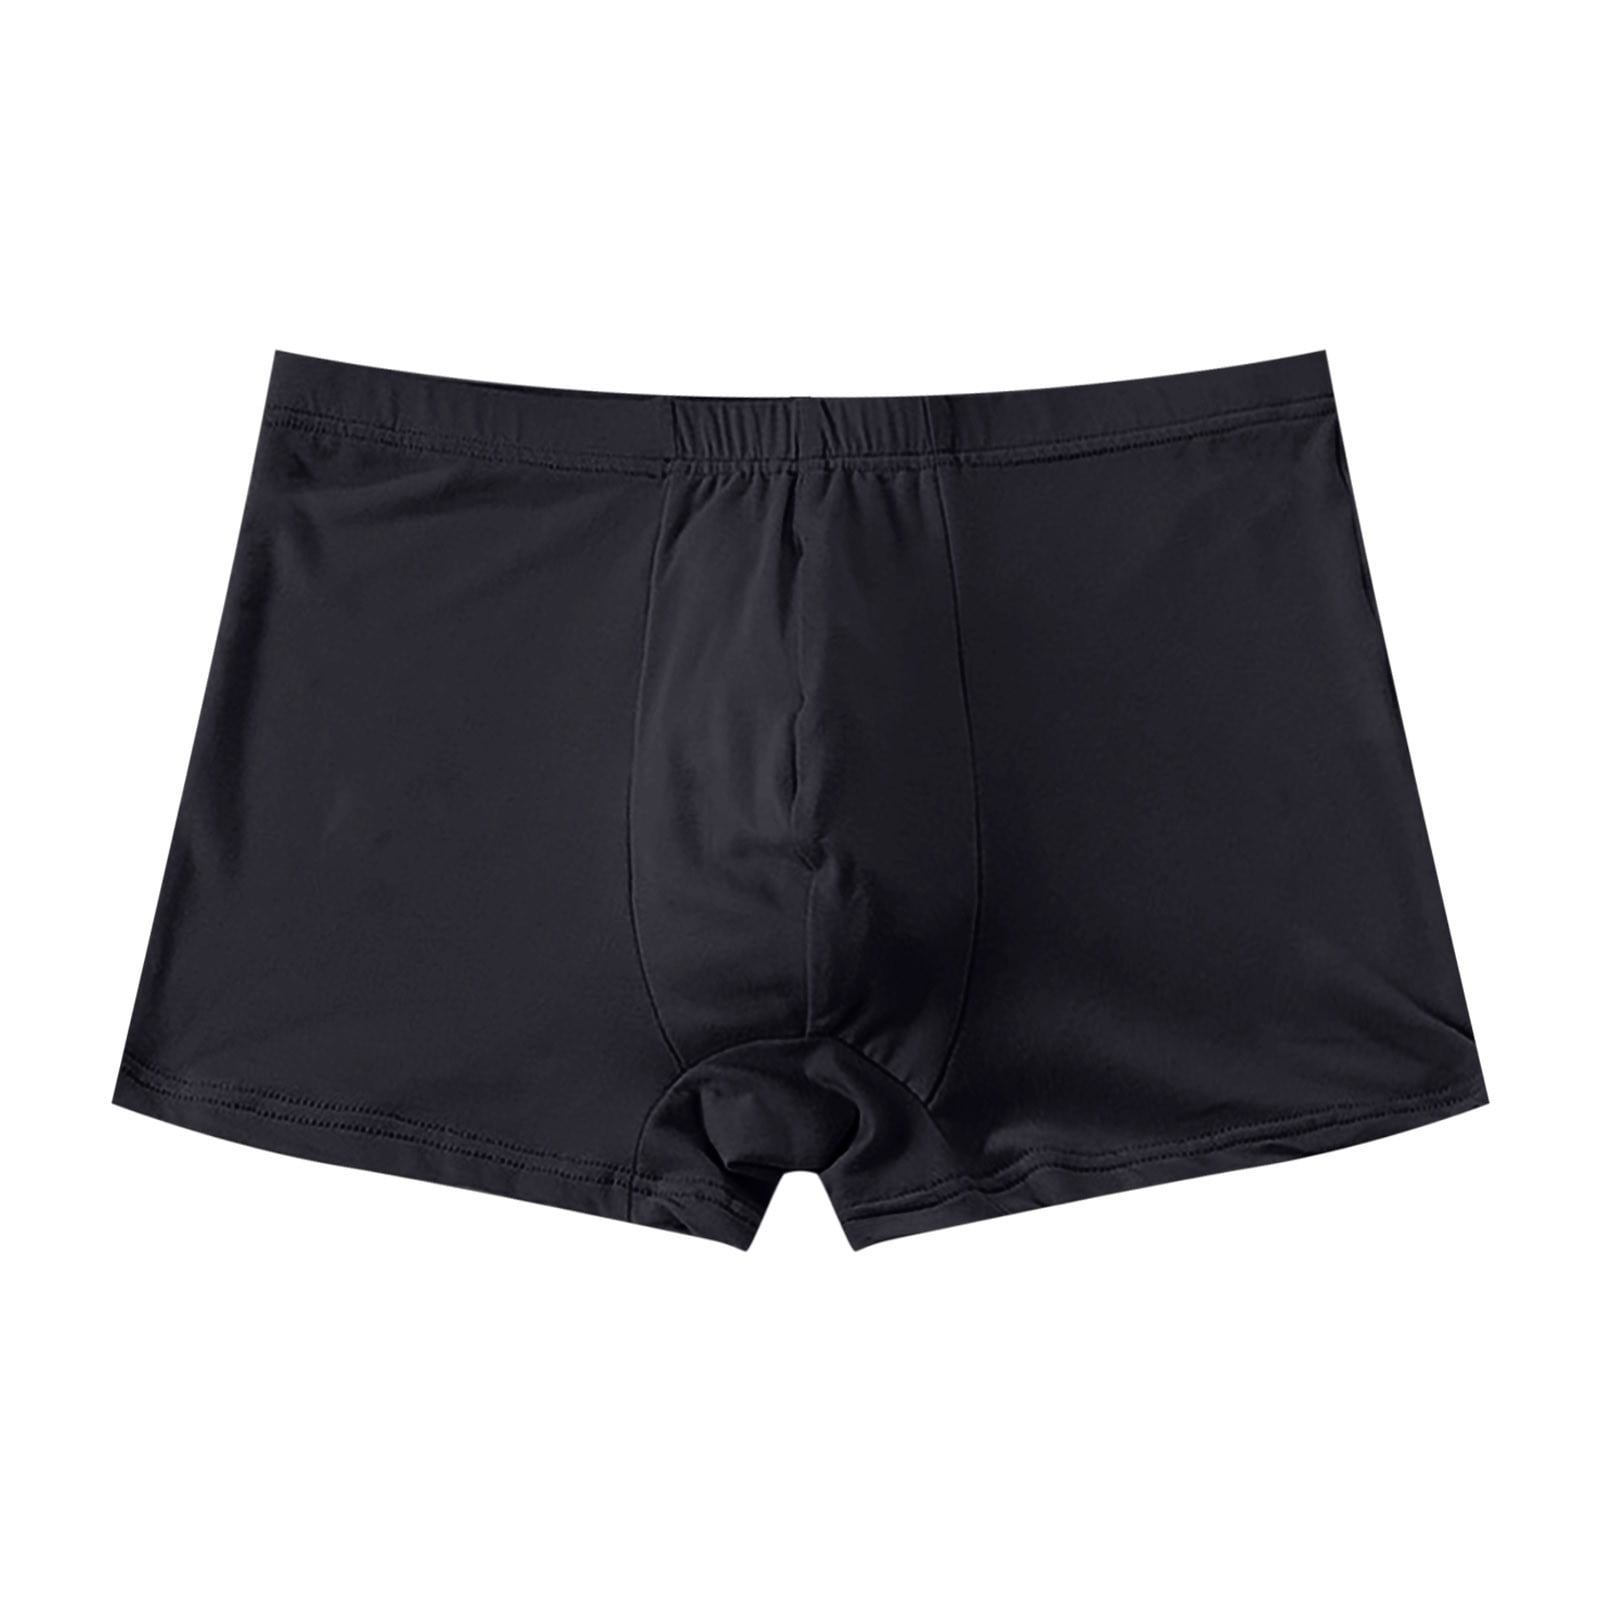 Durtebeua Men's Total Support Pouch Boxer Brief Cotton Underwear For ...